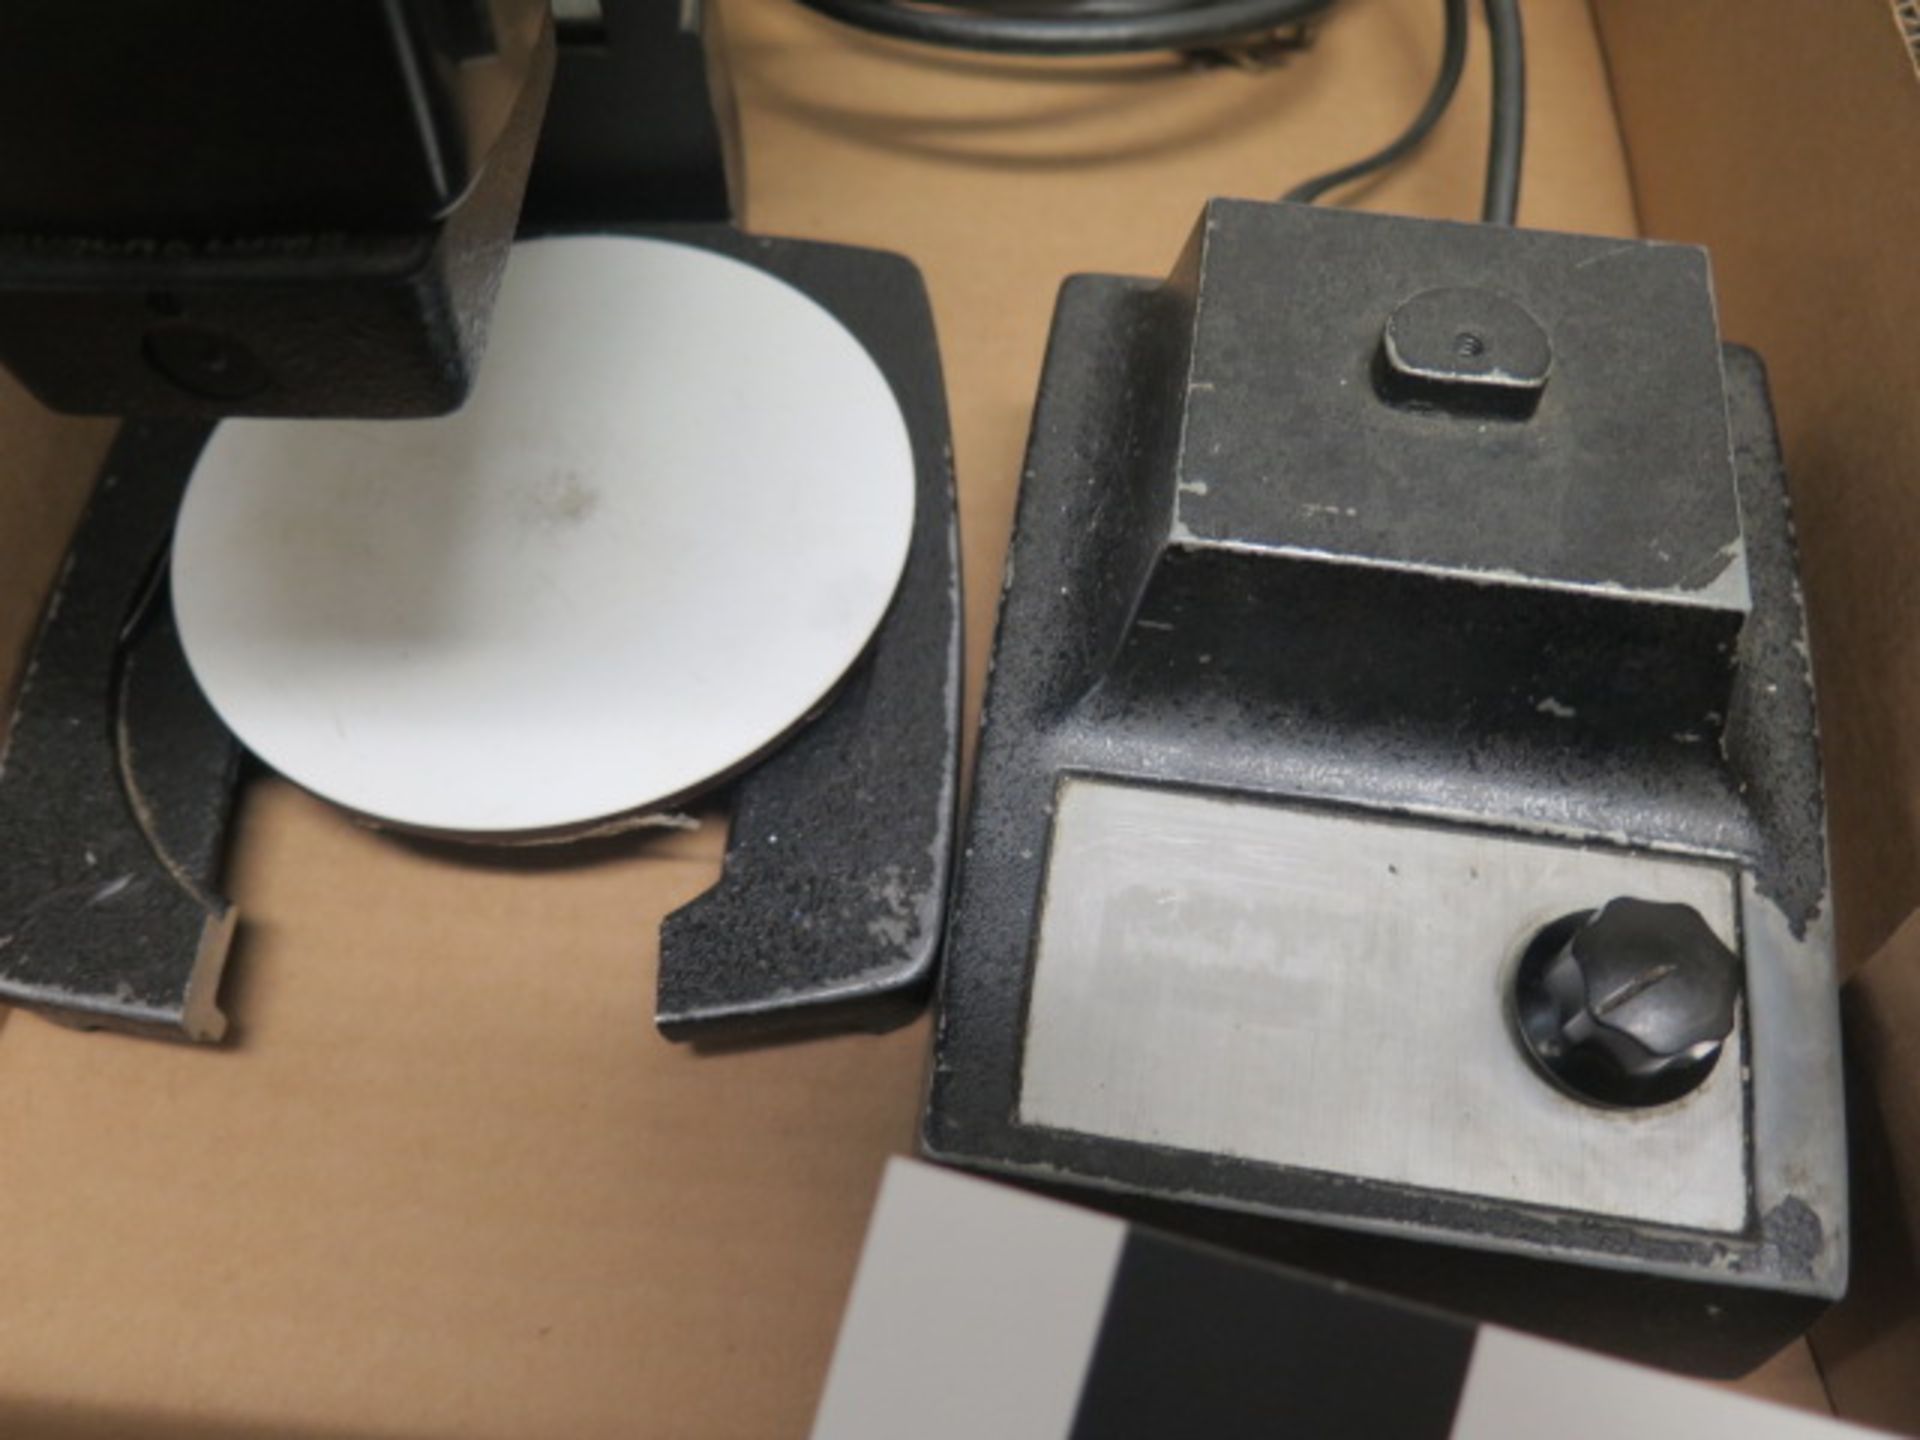 McBain Stereo Microscope w/ Light Source - Image 3 of 4